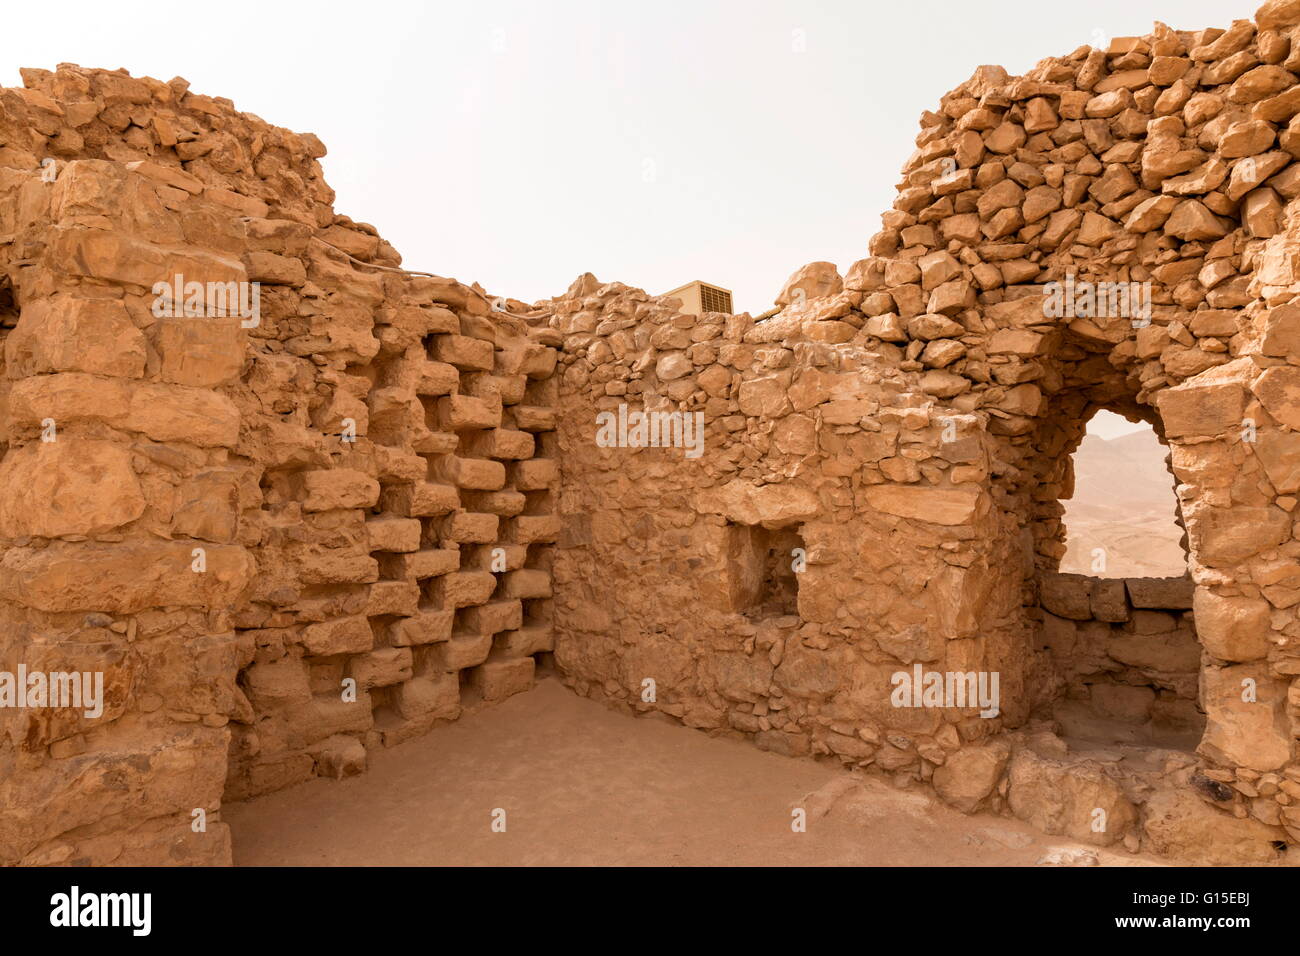 Komplizierten Steinarbeiten, Kolumbarium Turm (Taubenschlag), Festung Ruinen, Masada, UNESCO World Heritage Site, Israel, Nahost Stockfoto